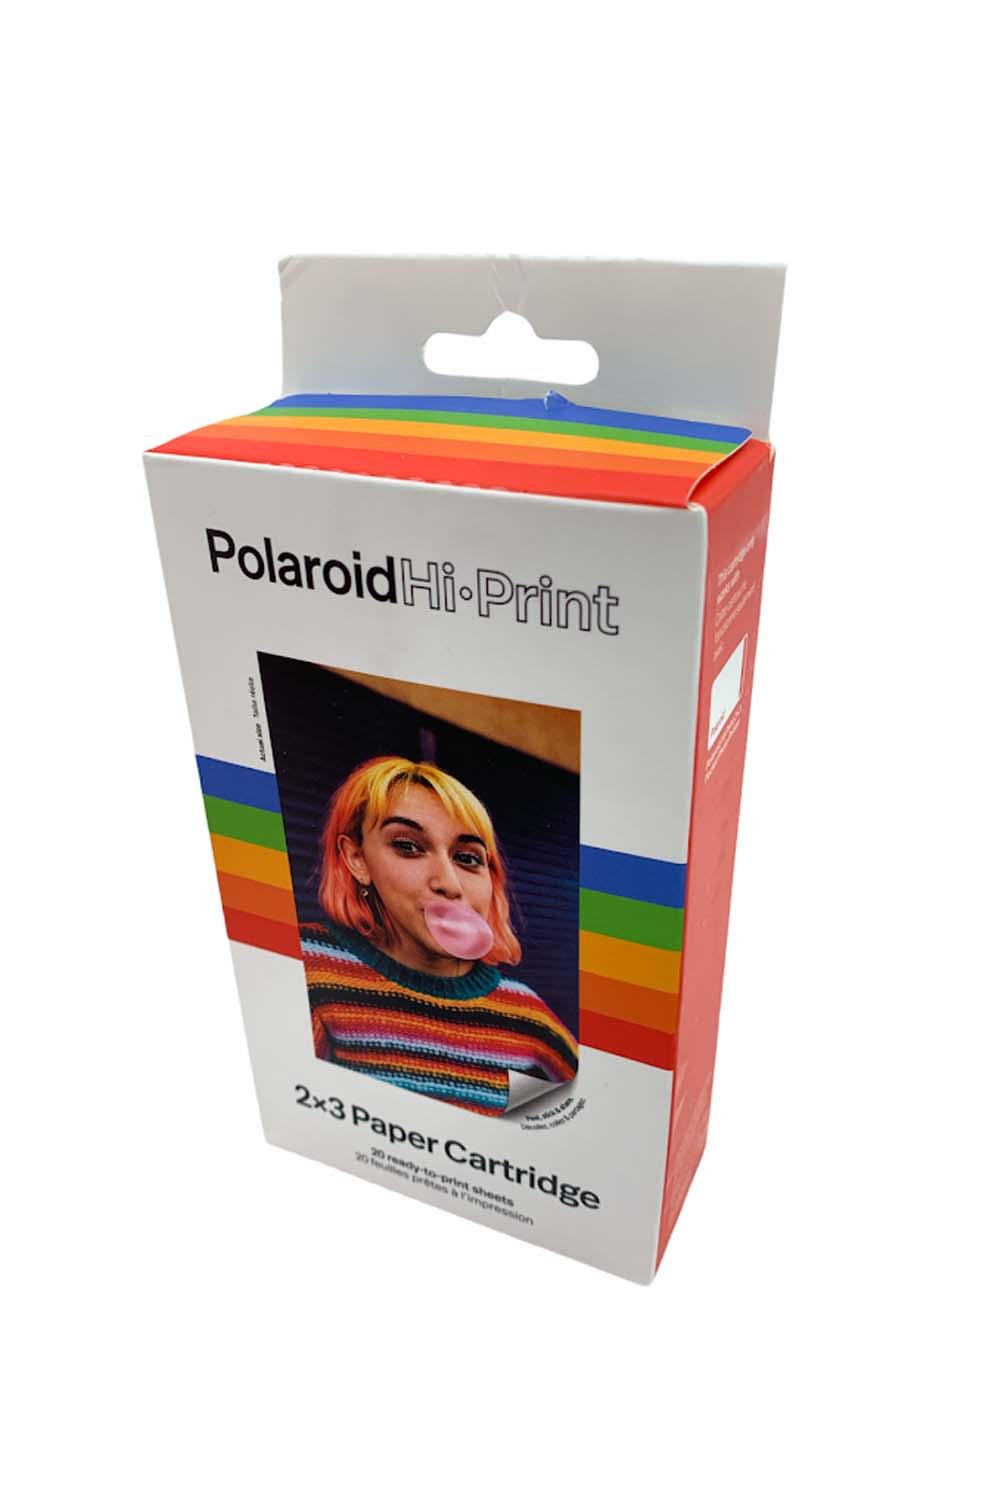 Polaroid 9046 Hi-Print Photo Printer 2x3 Cartridge 20 Sheets